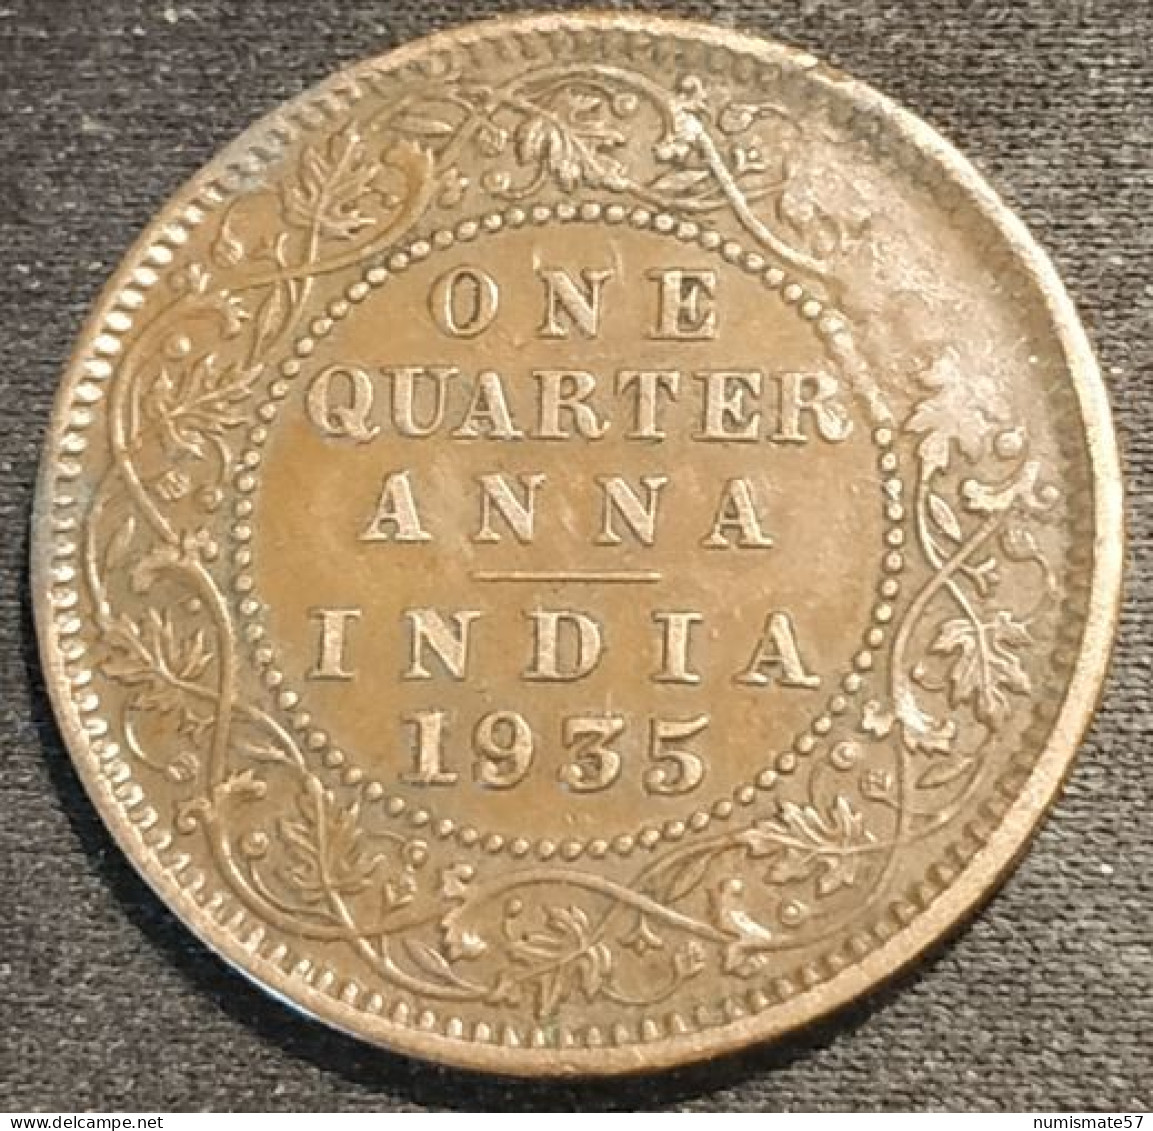 INDE - INDIA - ¼ - 1/4 ANNA 1935 - George V - KM 512 - ( ONE QUARTER ANNA ) - India